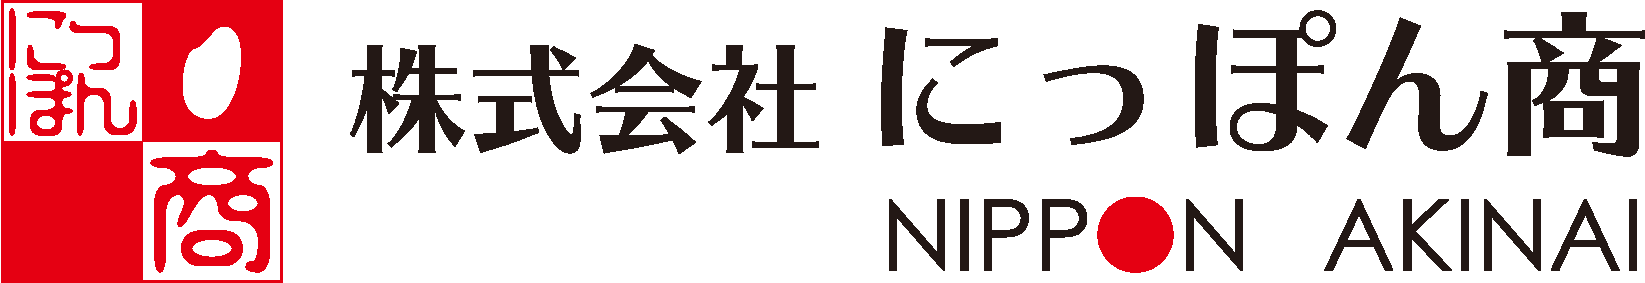 Consulting Team「Nippon Akinai」